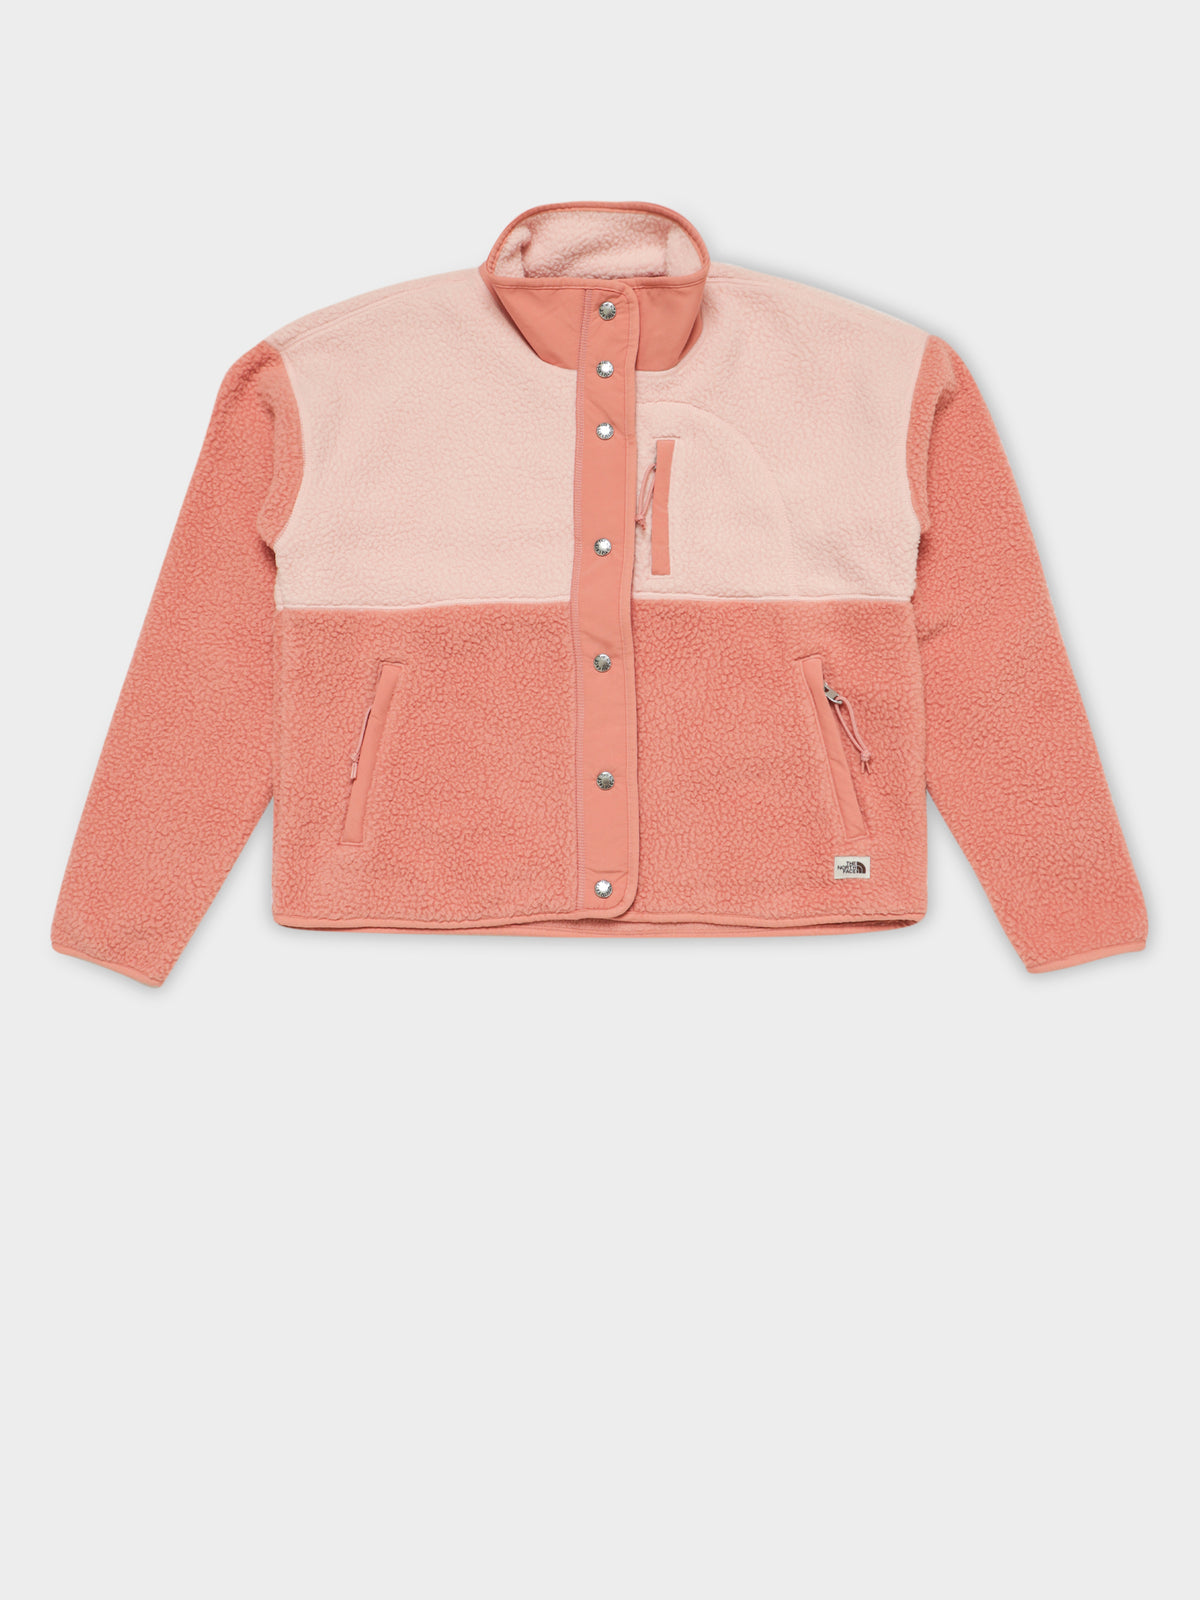 Cragmont Fleece Jacket in Rose Dawn Pink